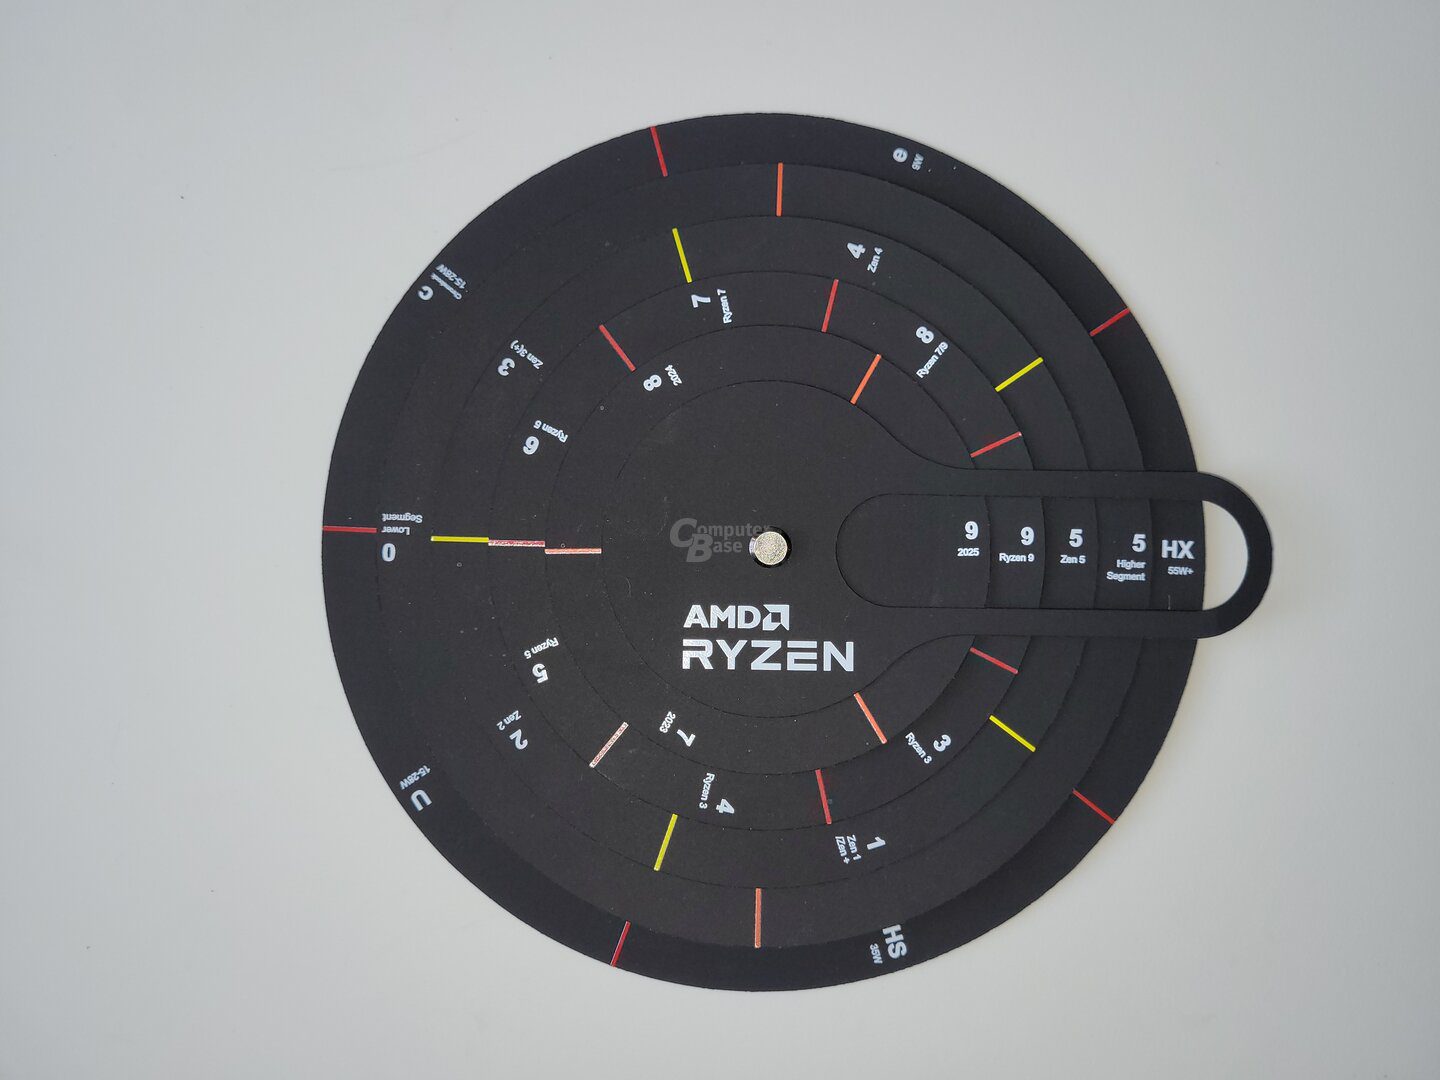 AMD Ryzen name generator for laptops